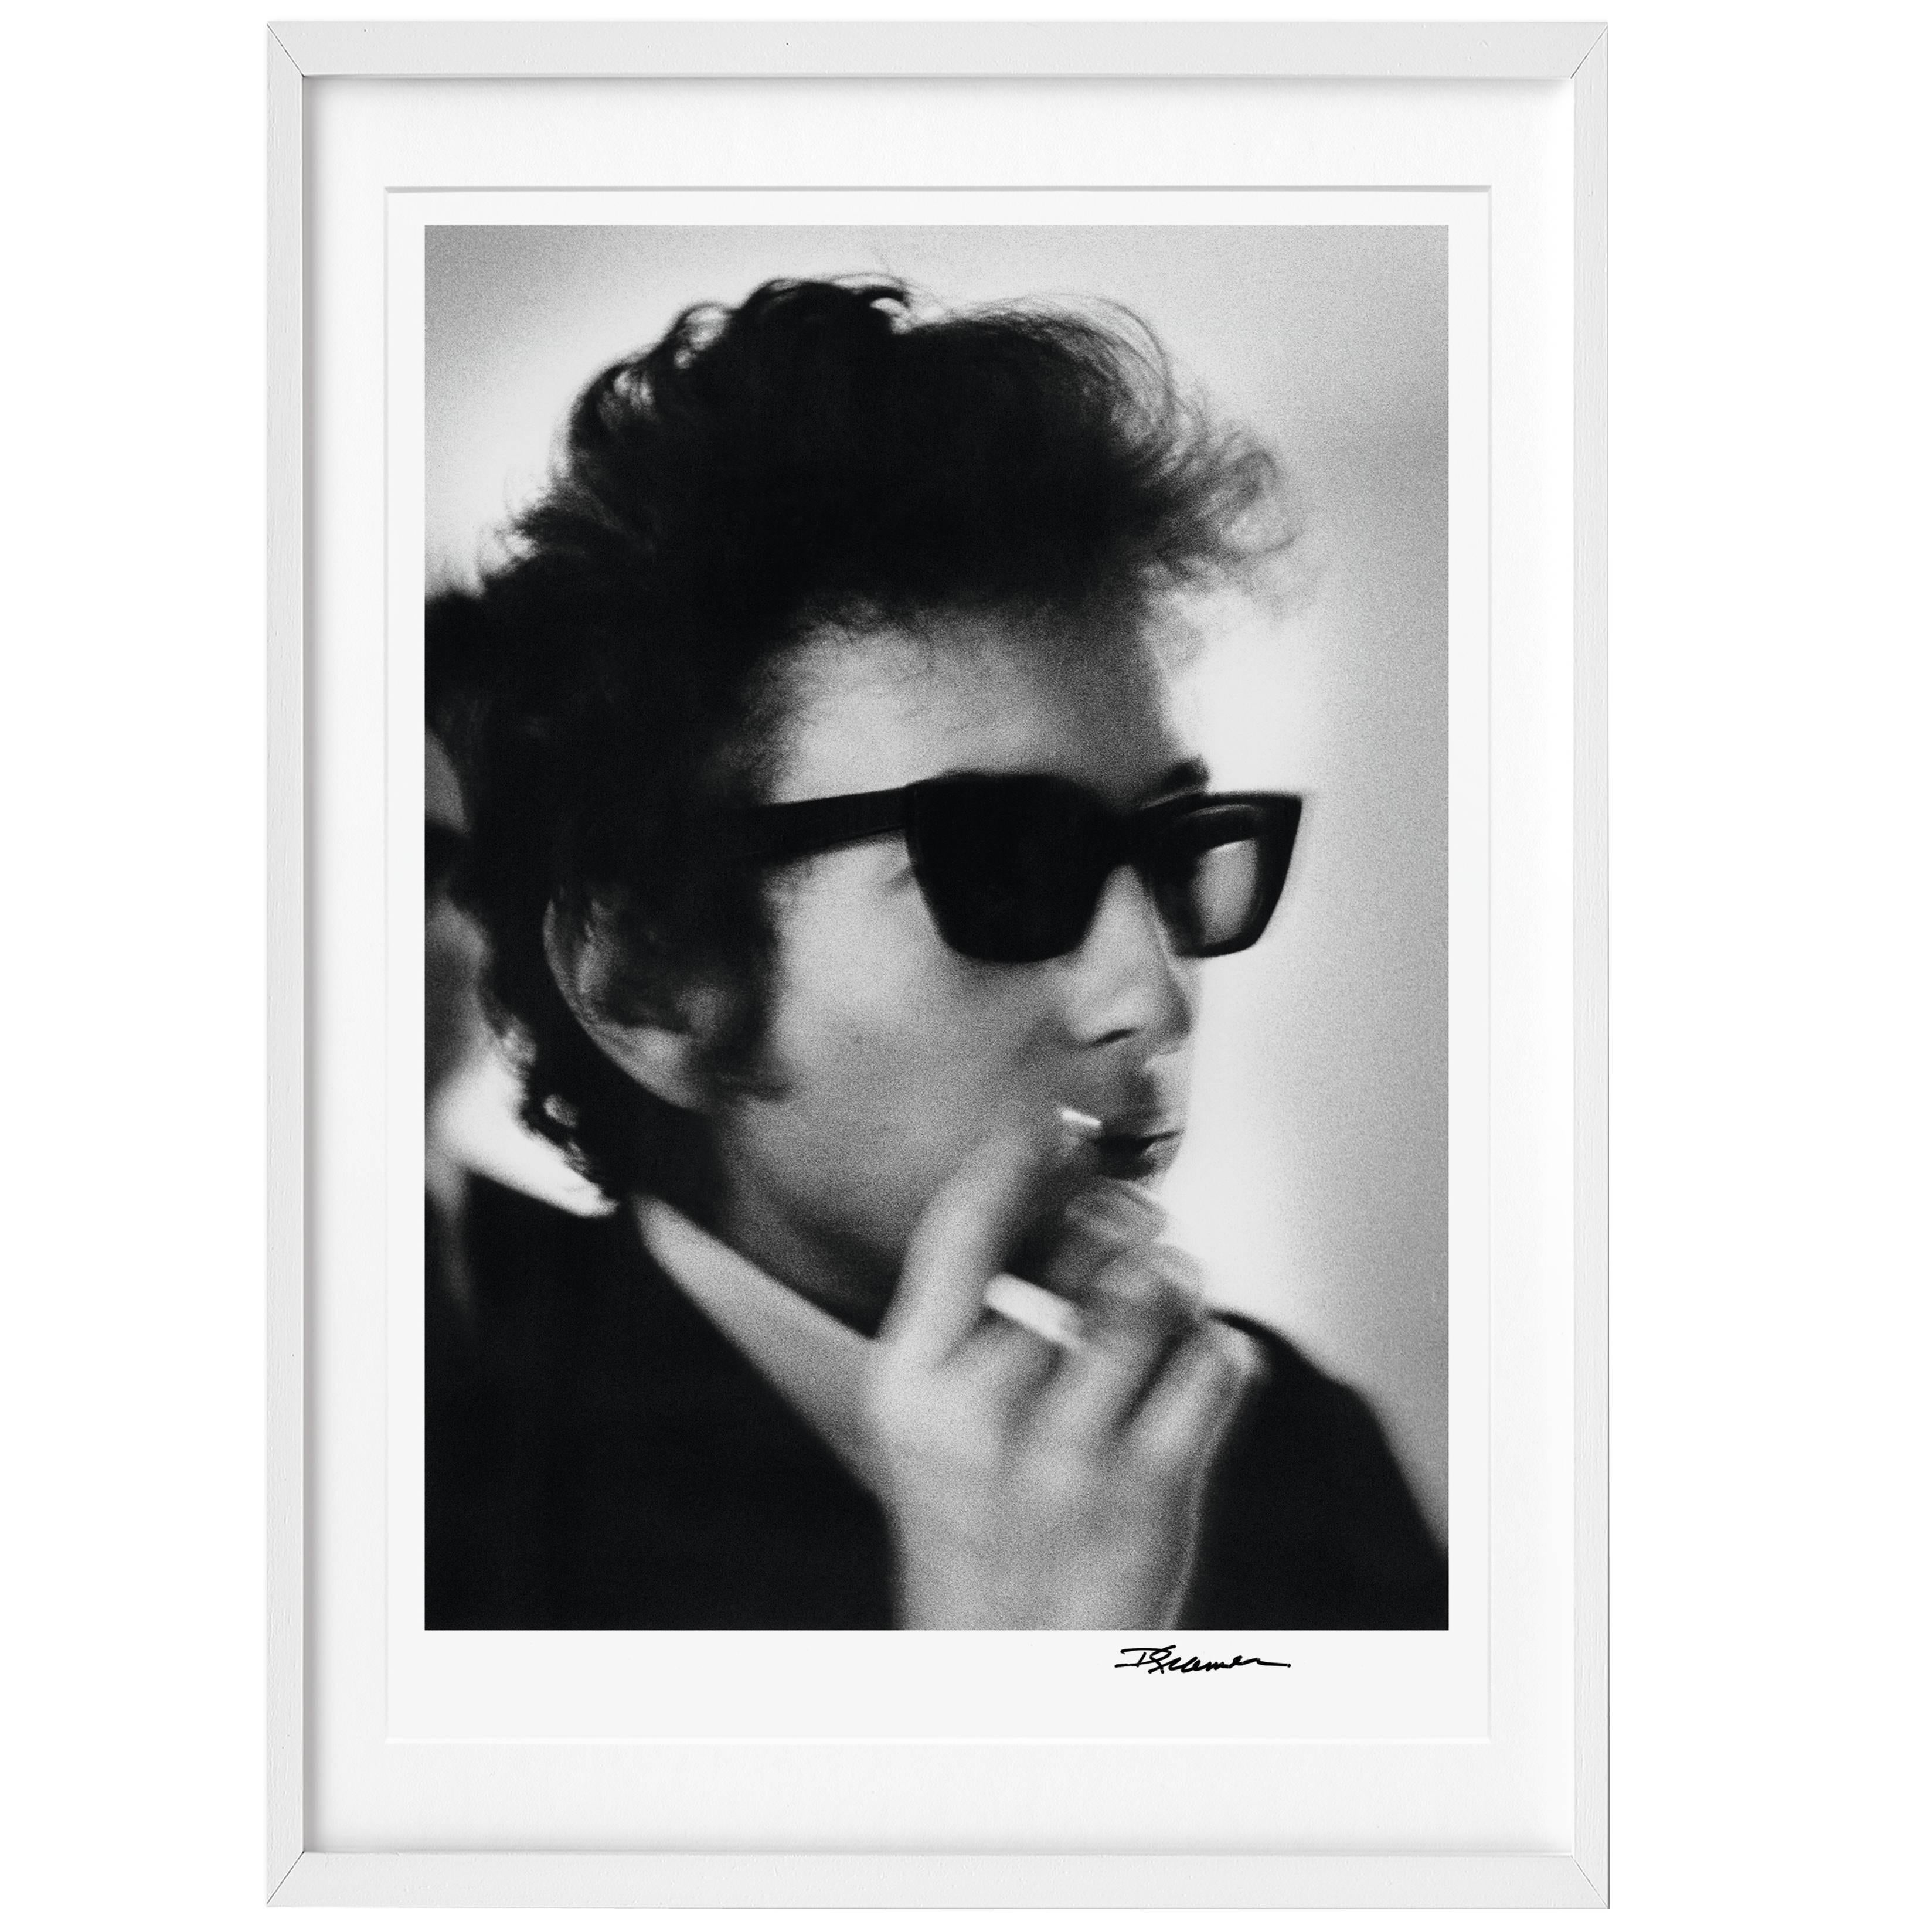 Daniel Kramer, Bob Dylan, Art Edition No. 1-100 ‘Bob Dylan with Dark Glasses, NY